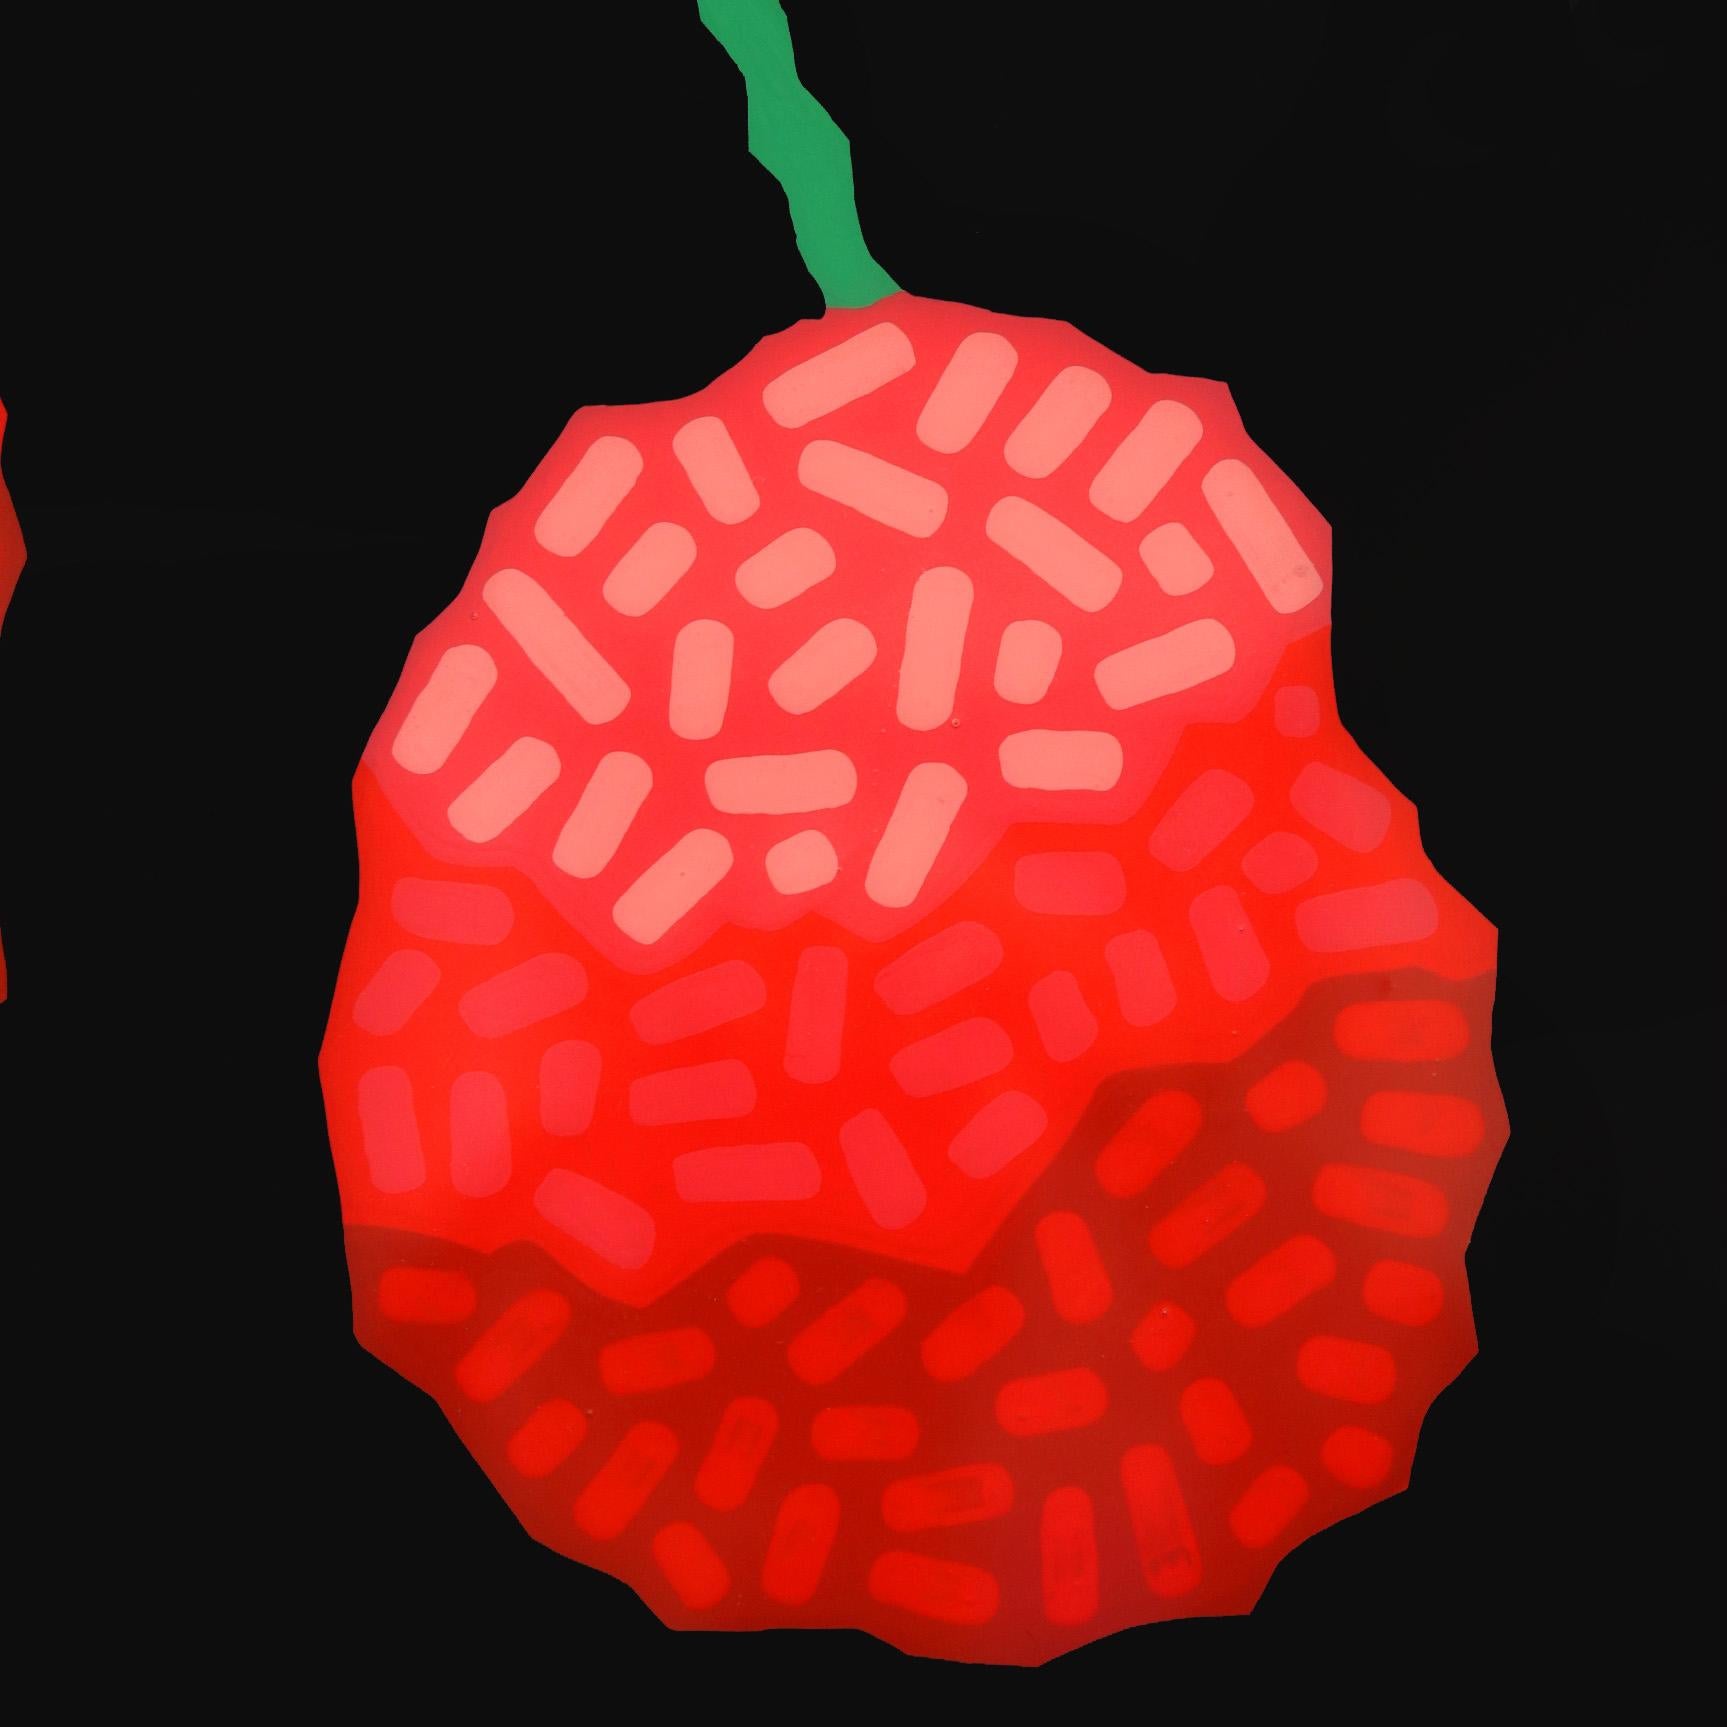 Black Cherries - Vibrant Red Fruit Southwest Inspired Pop Art Food Painting For Sale 5